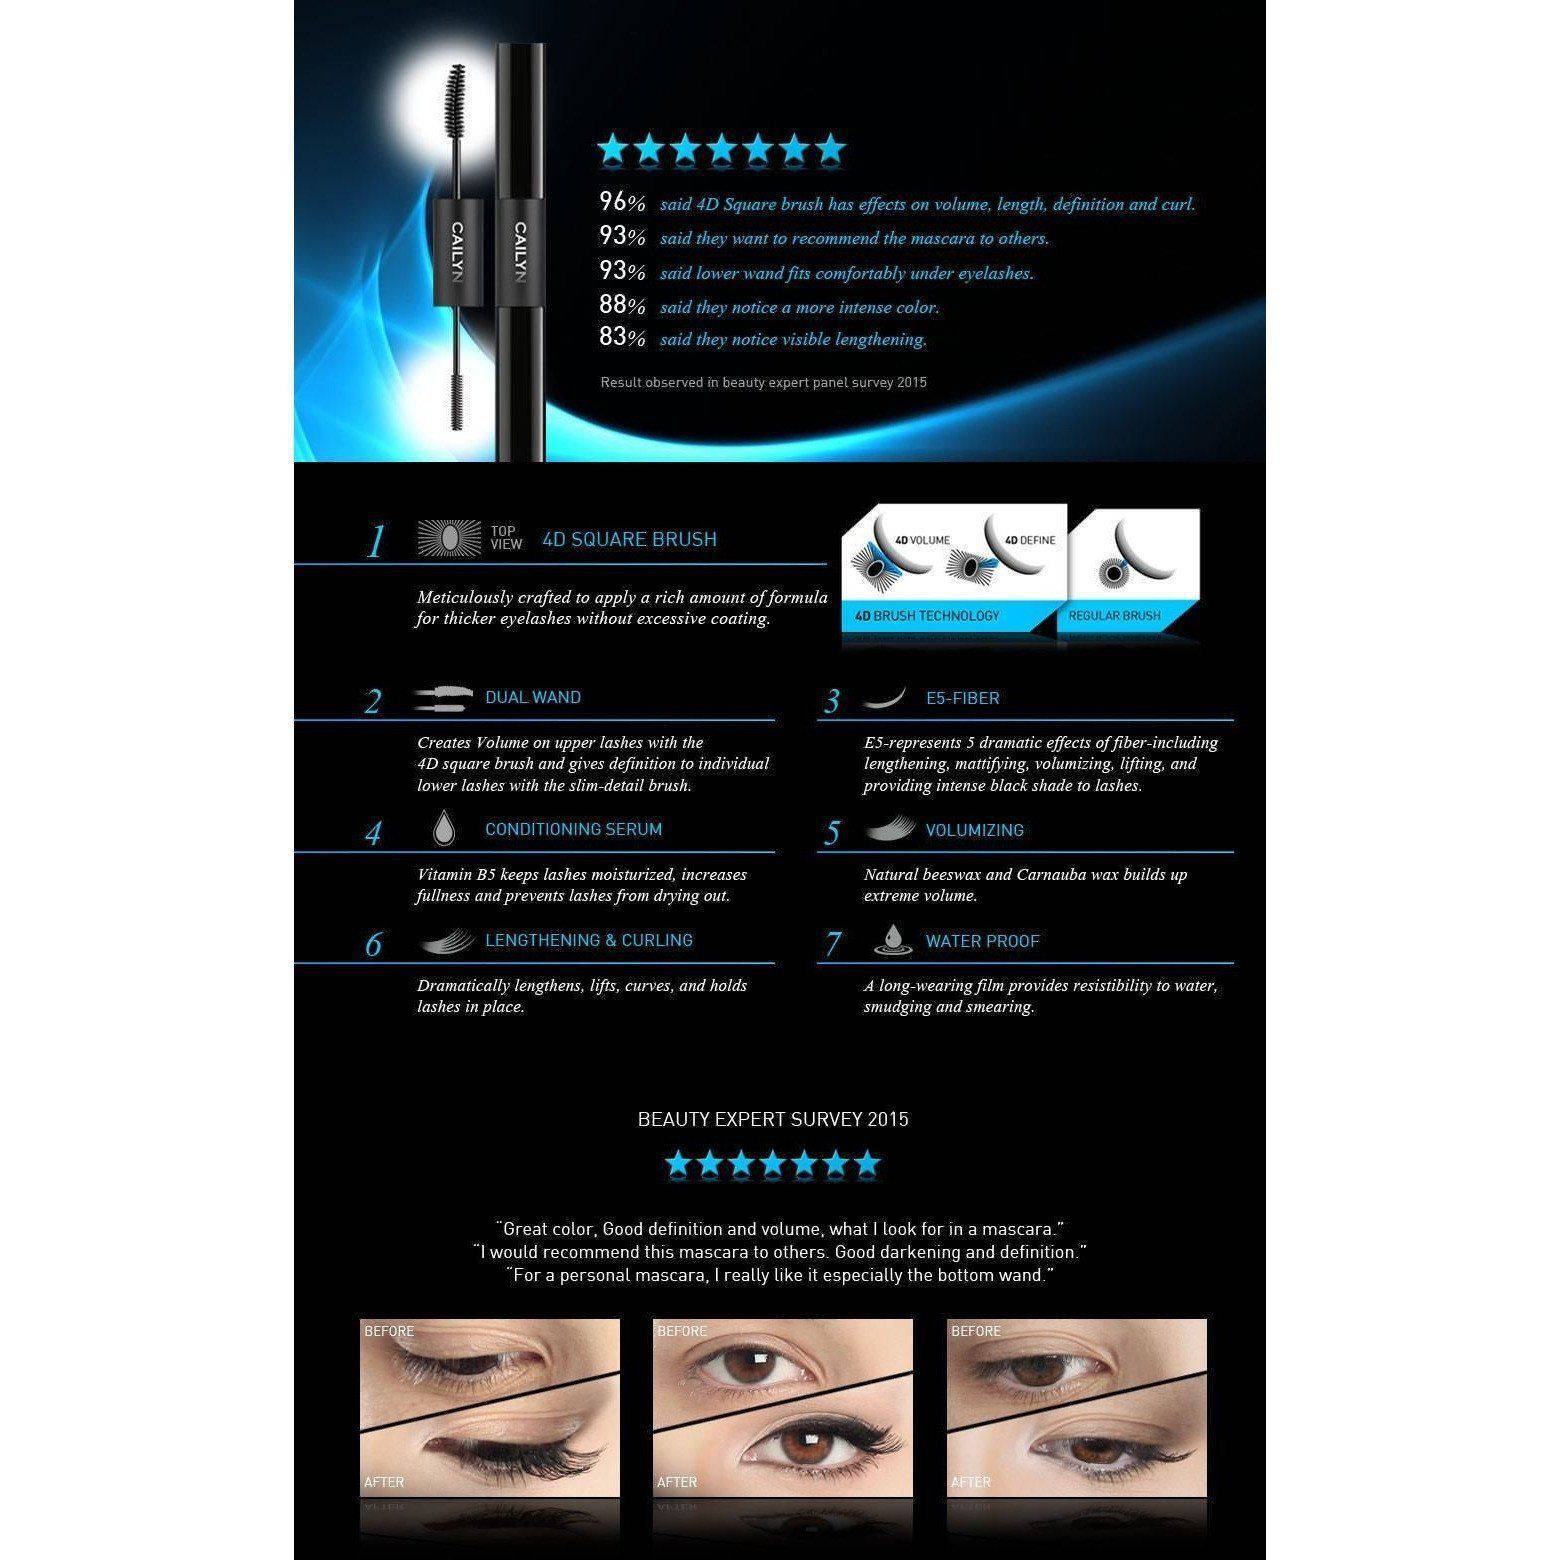 Cailyn 7 In 1 Dual 4D Fiber Mascara - Universal Nail Supplies